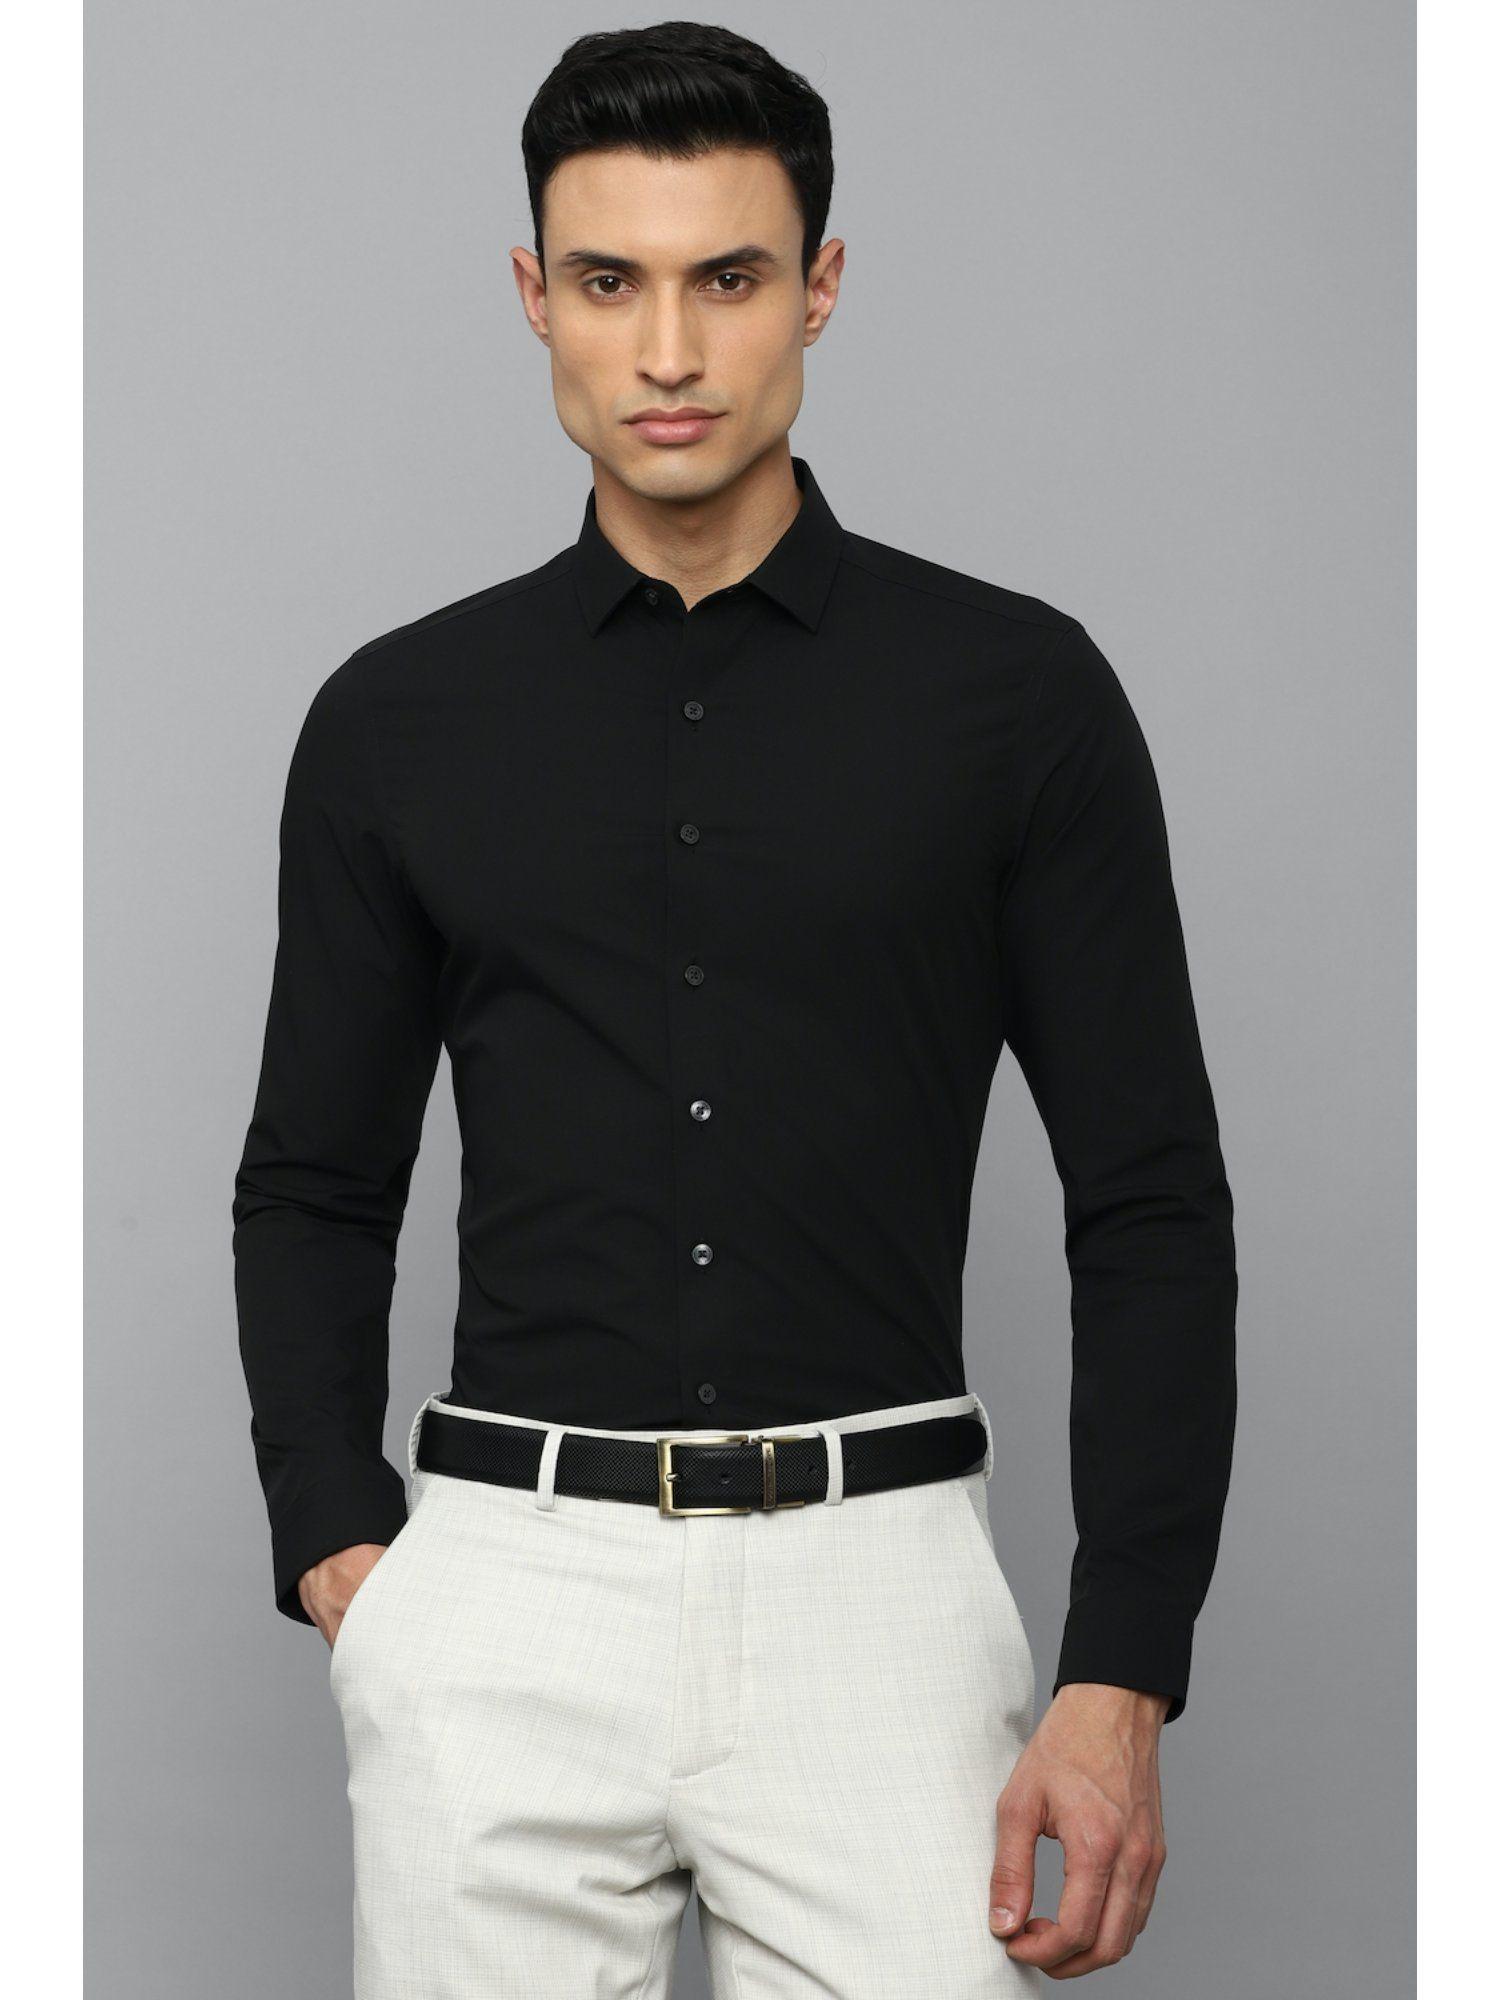 Men Black Super Slim Fit Solid Full Sleeves Formal Shirt